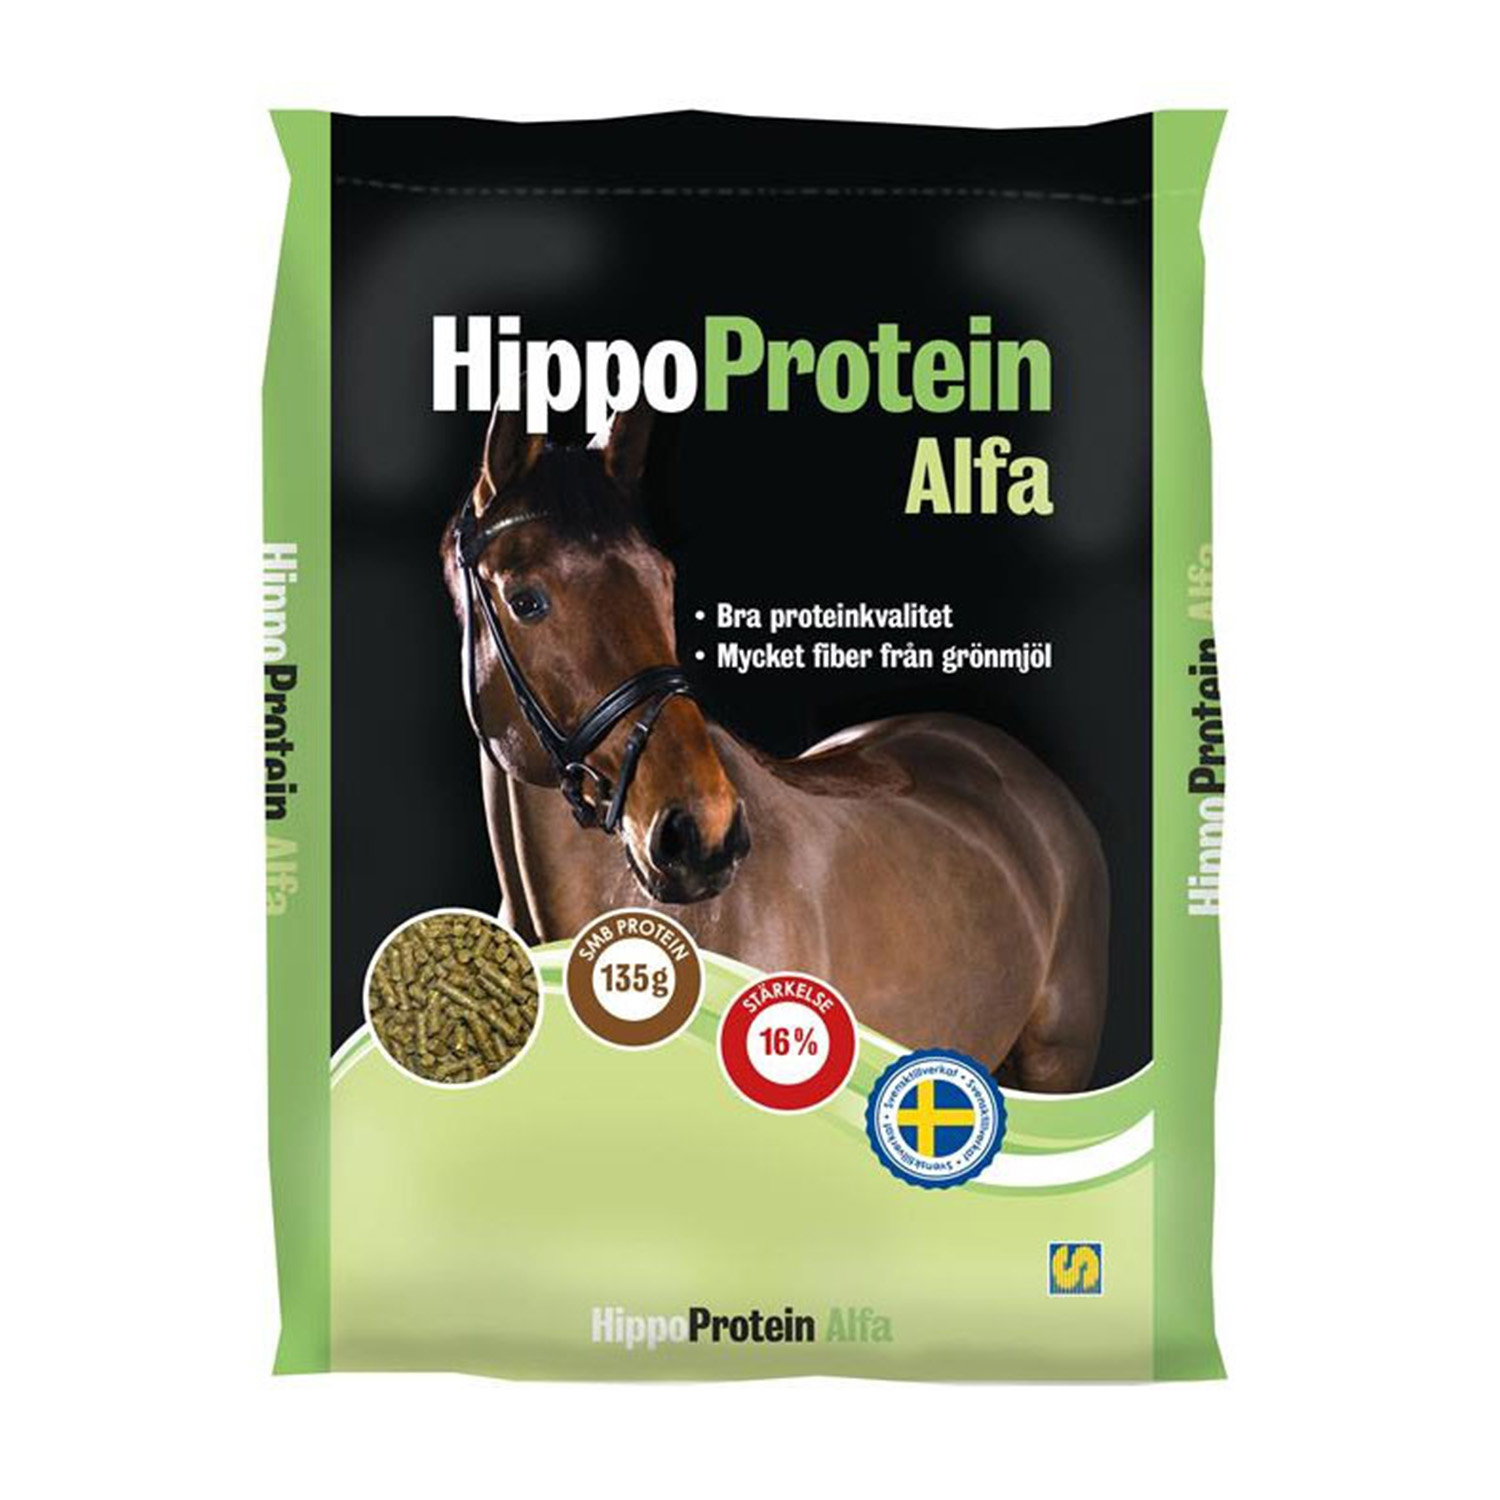 Hippo protein alfa 15 kg